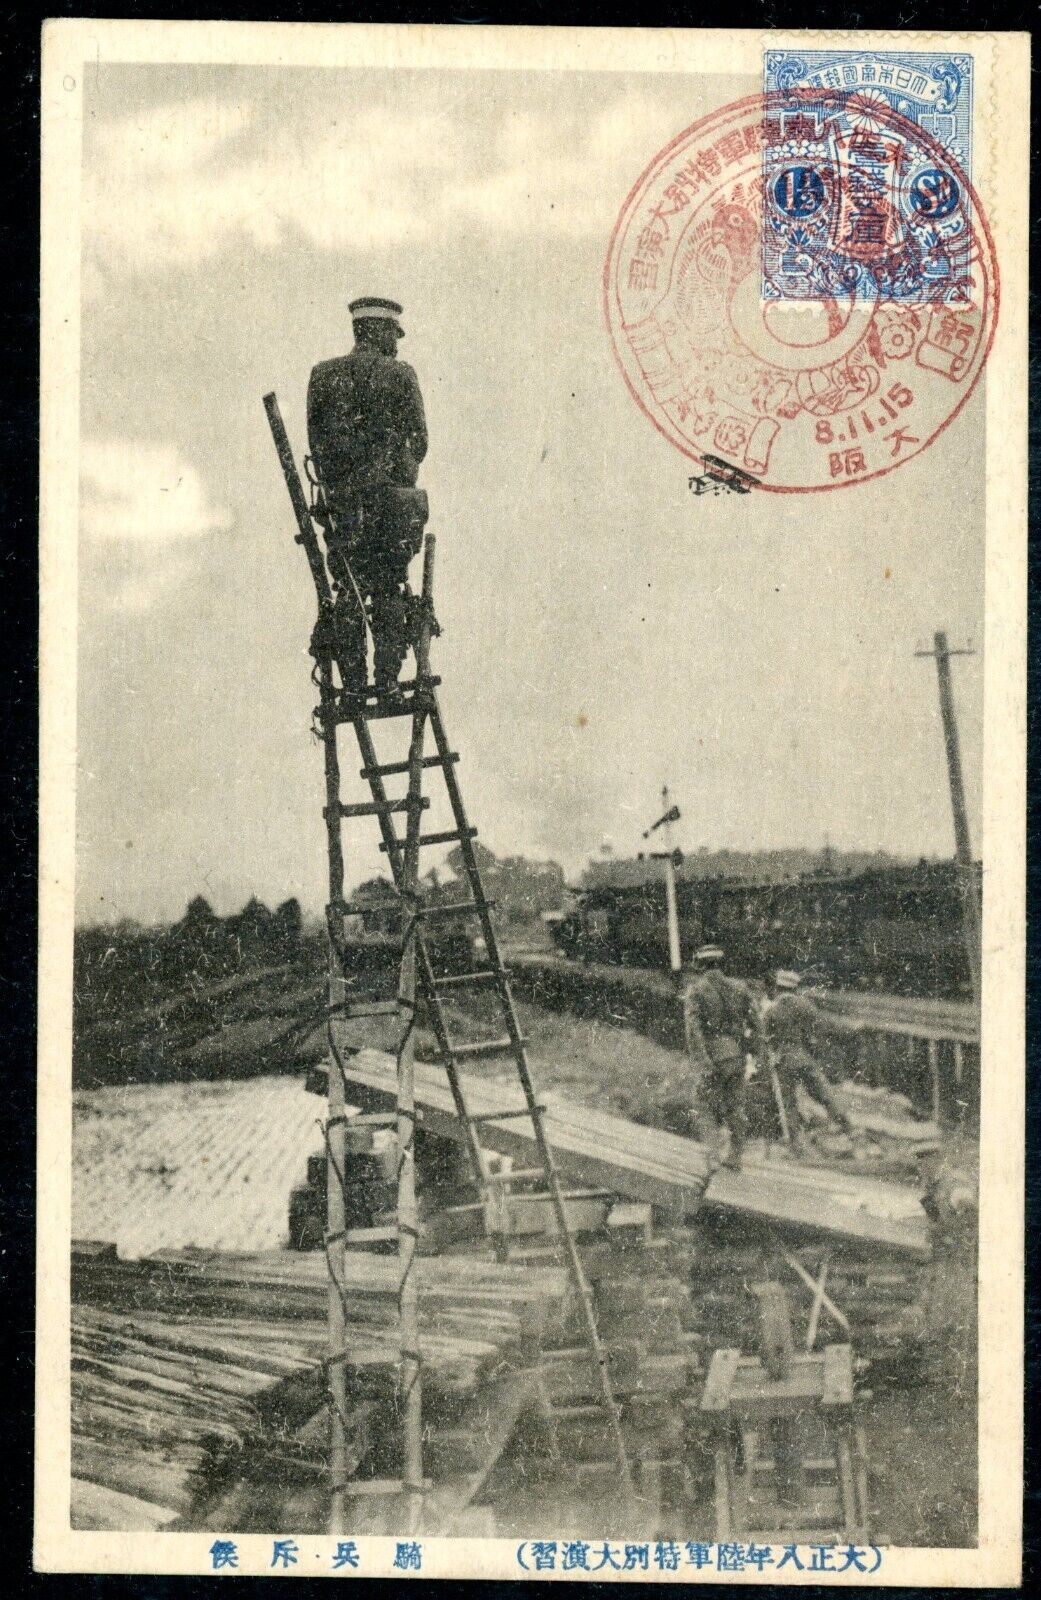 Japan 1915 PPC Showing Military Site WWI (1914-1918)  8-11-15 Osaka to Belgium